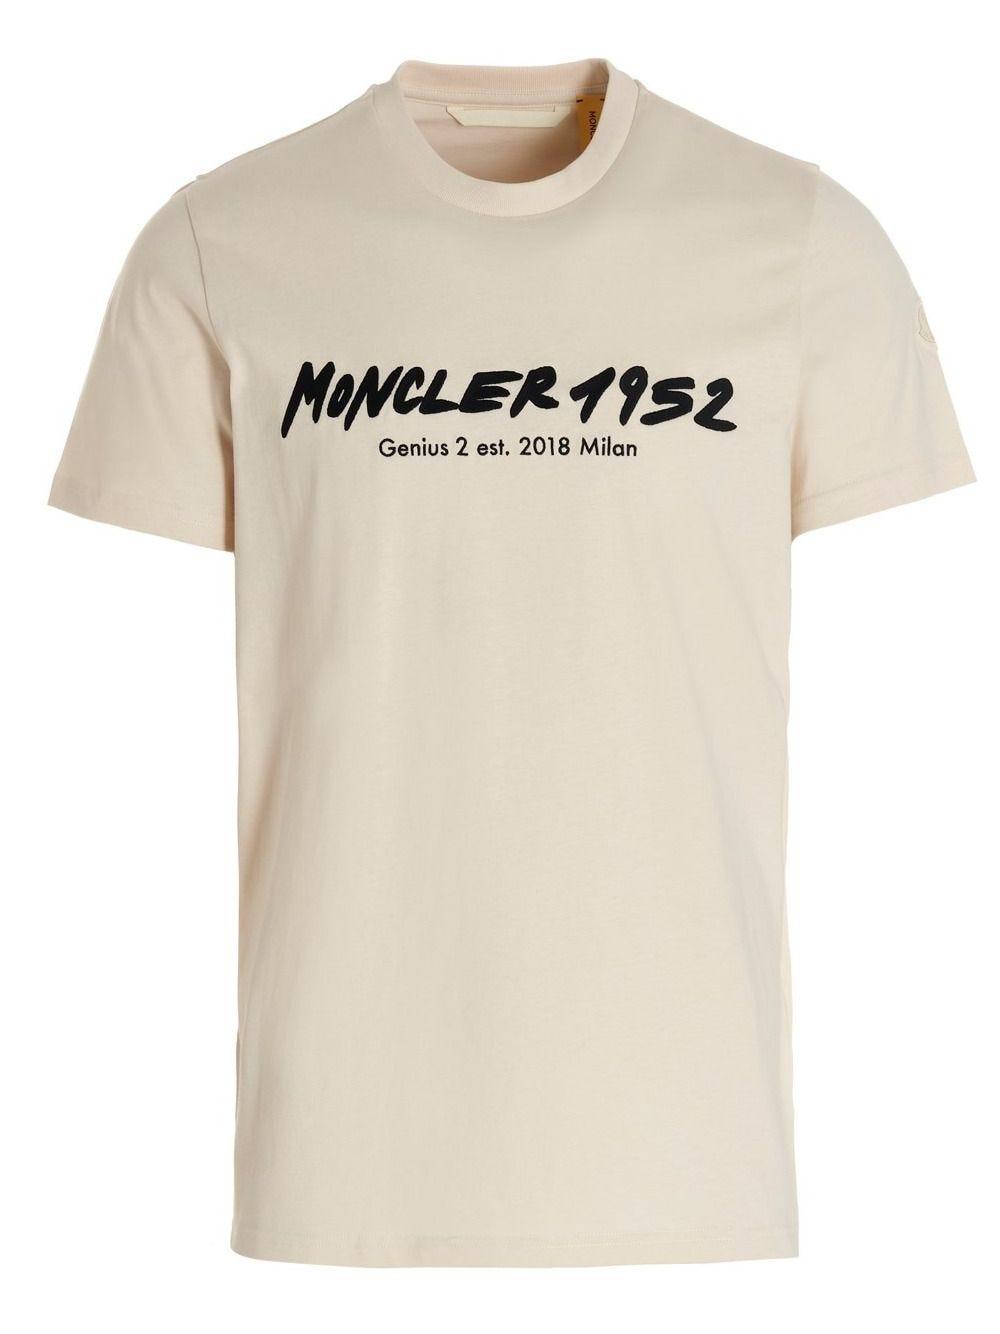 Moncler Genius 2 Moncler 1952 T-shirt Beige in Natural for Men | Lyst